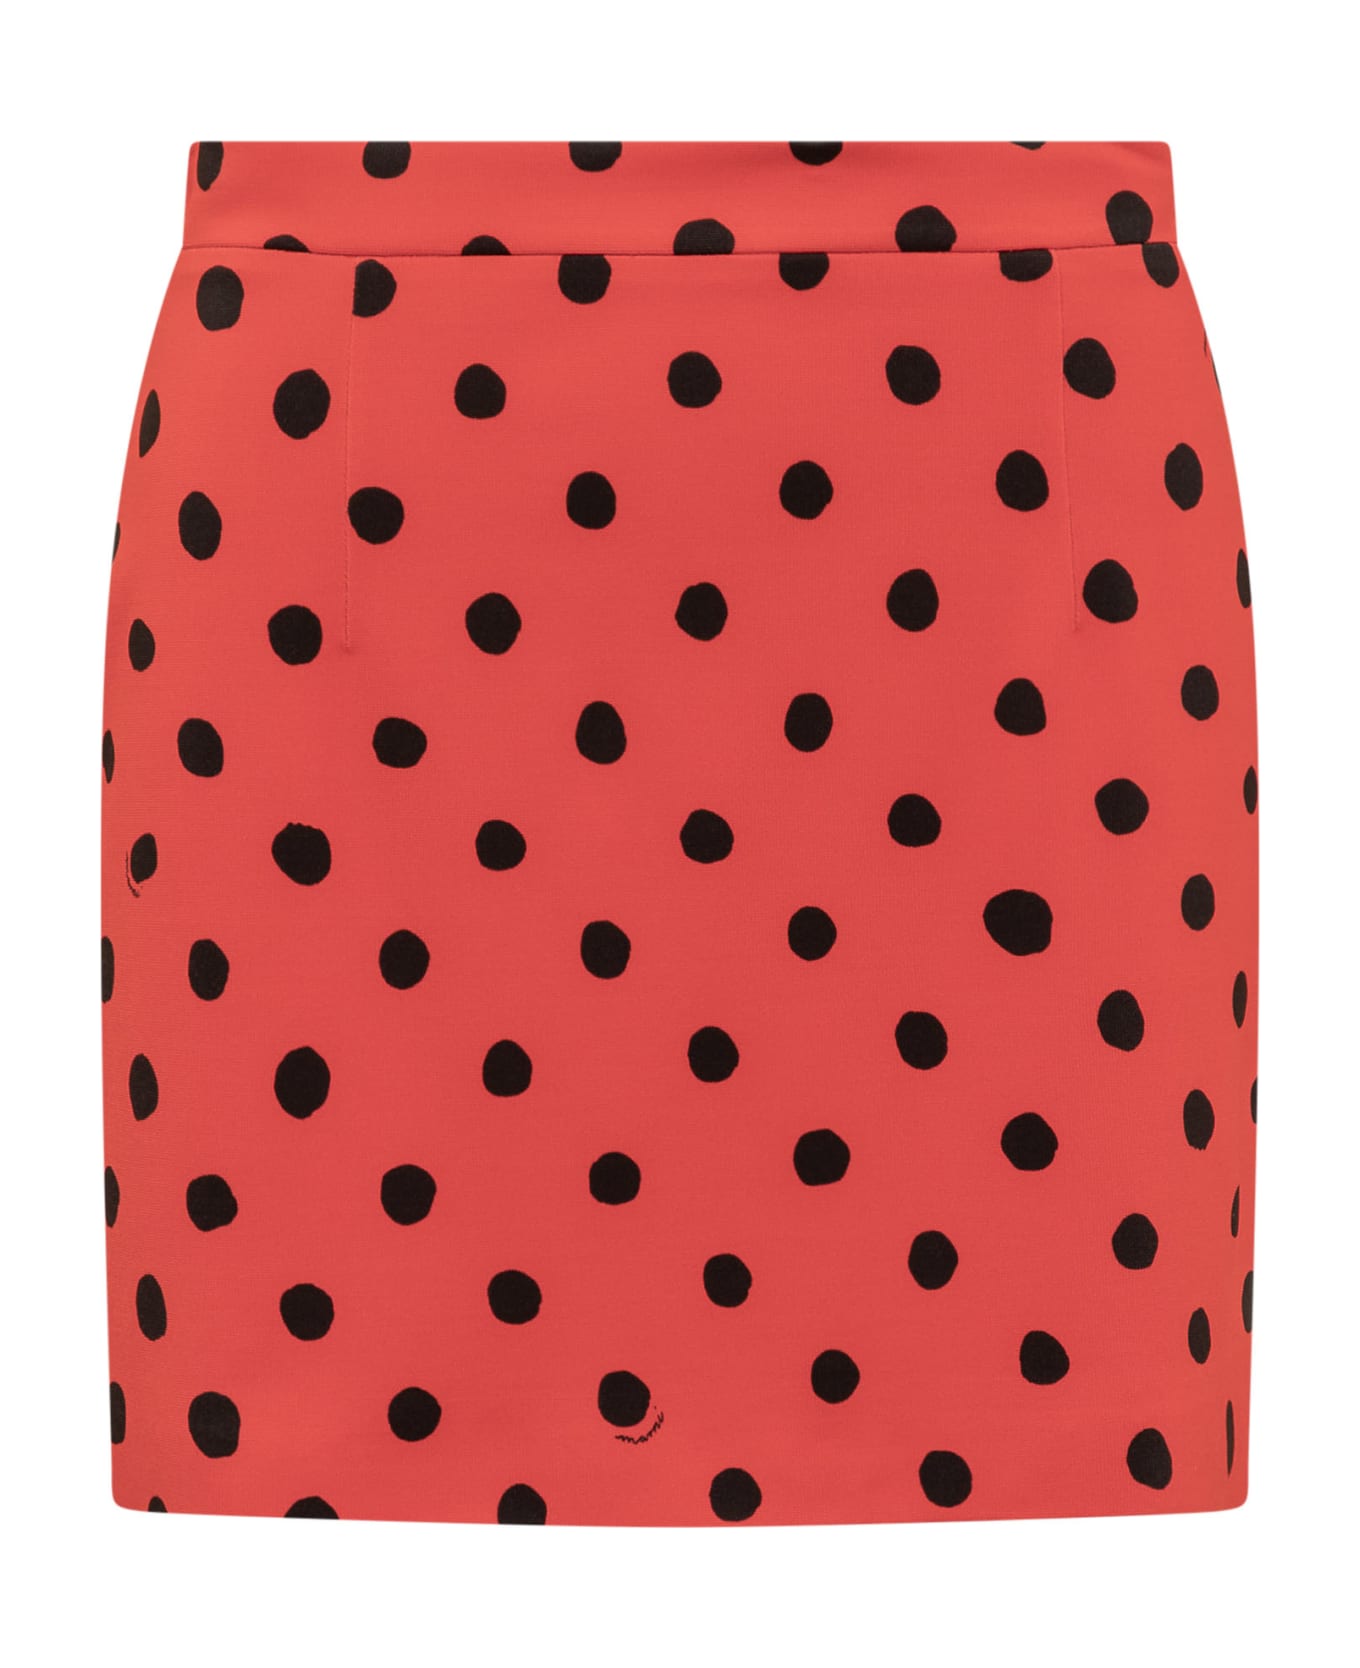 Marni Polka Dot Skirt - Red